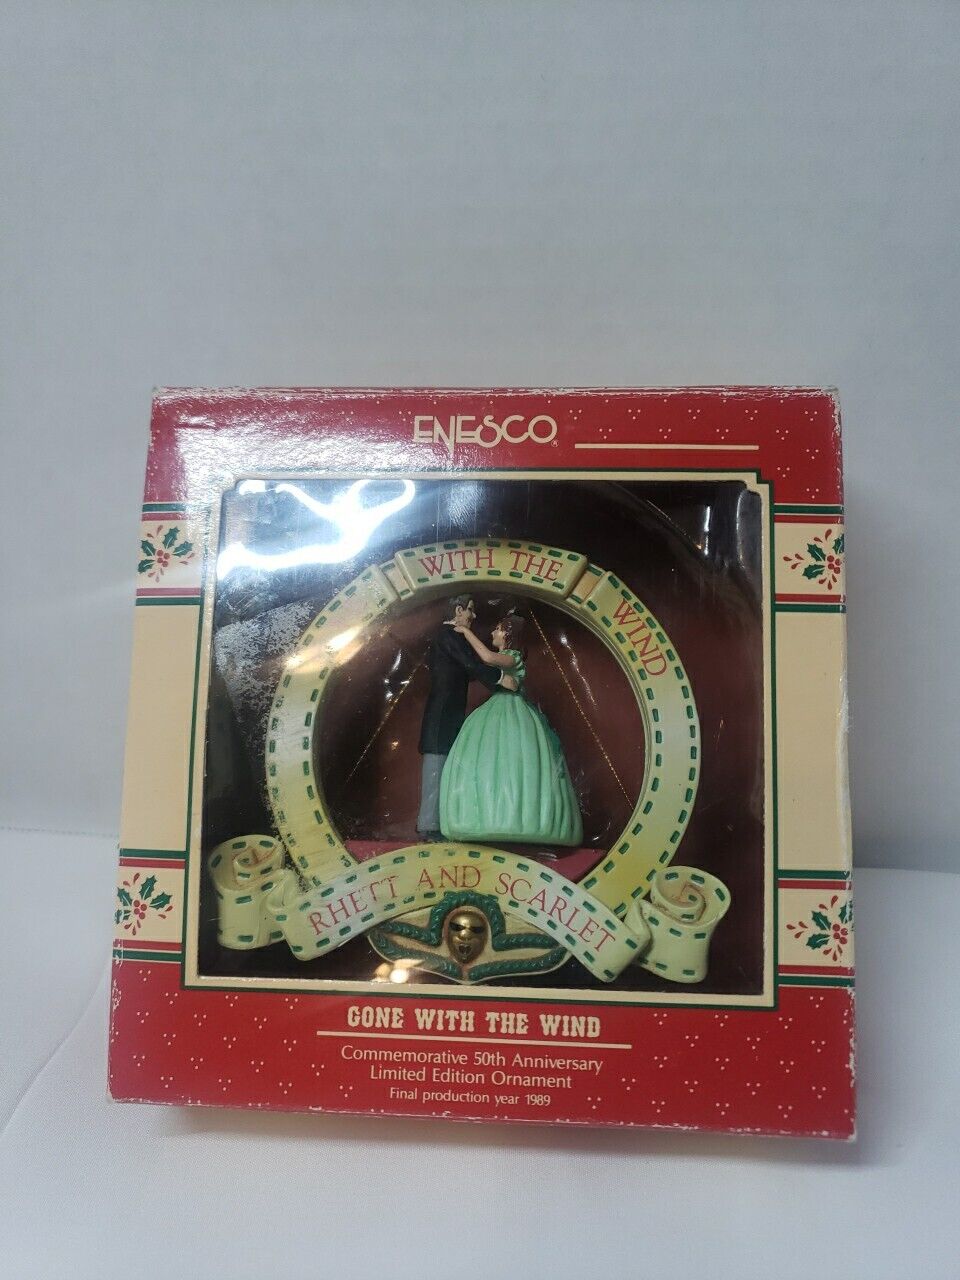  Enesco Treasury Ornament 50th Anniversary Gone With The Wind 1989 Rare New